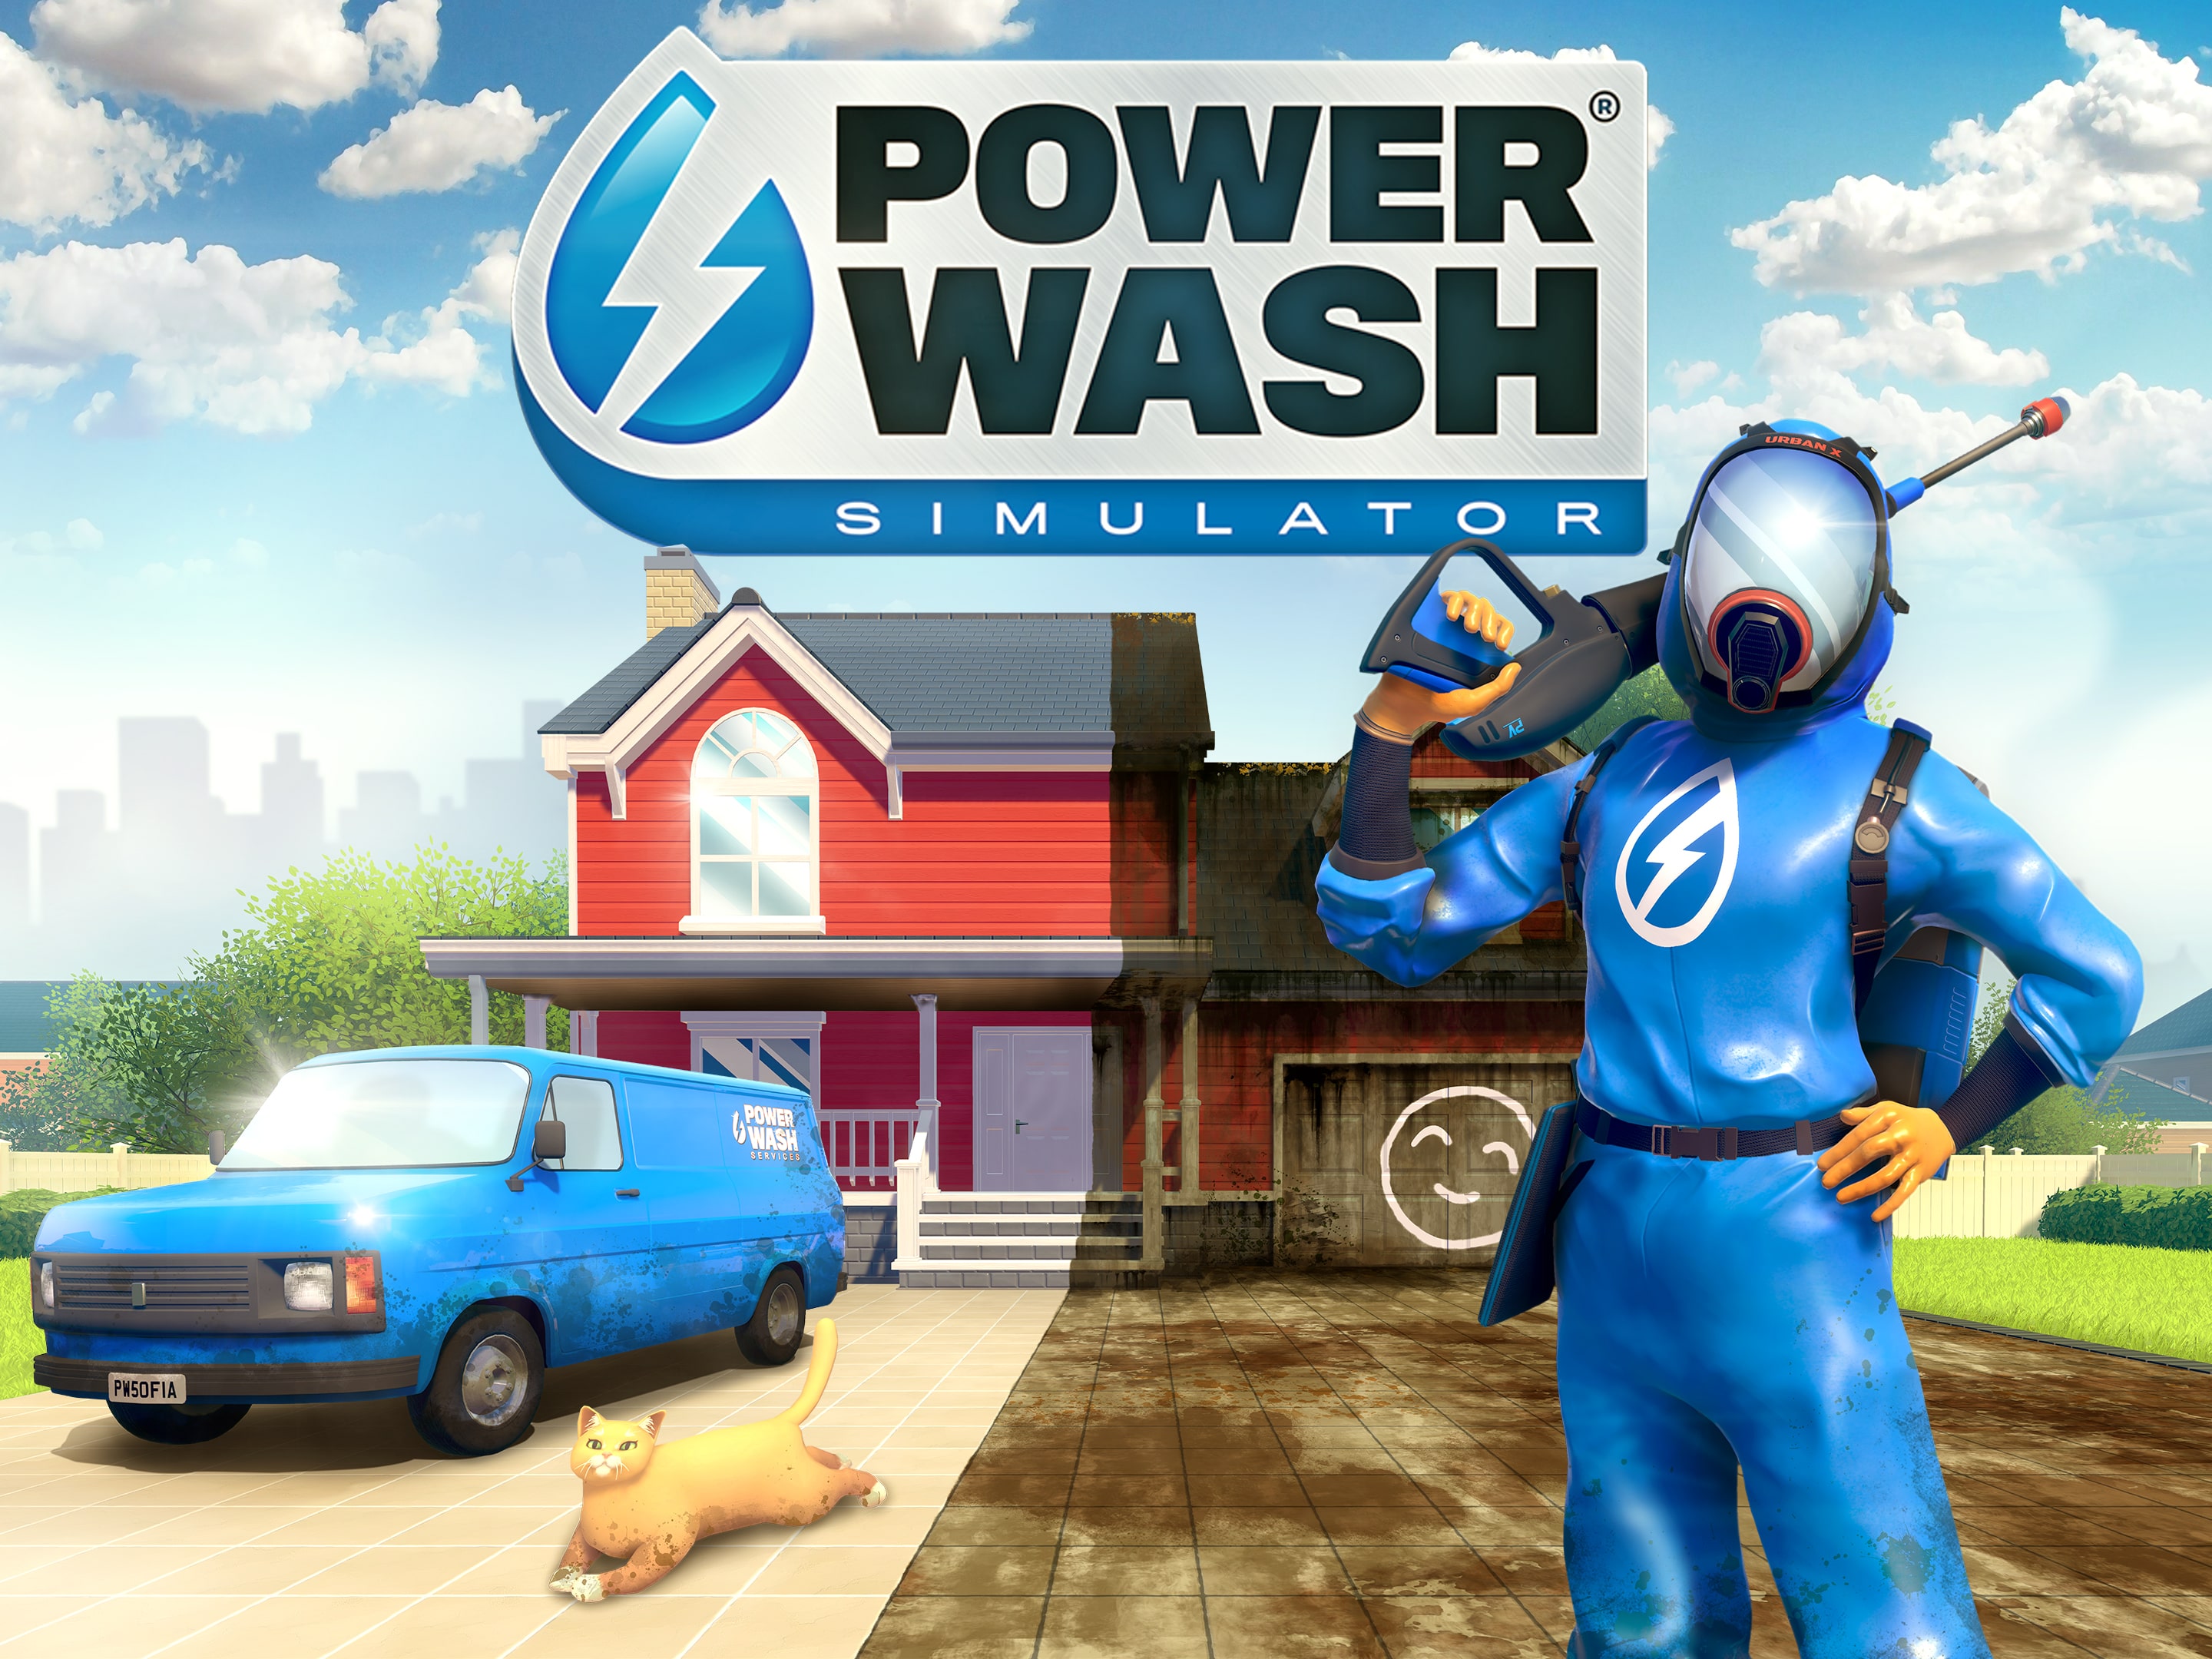 Power Wash Simulator on the App Store